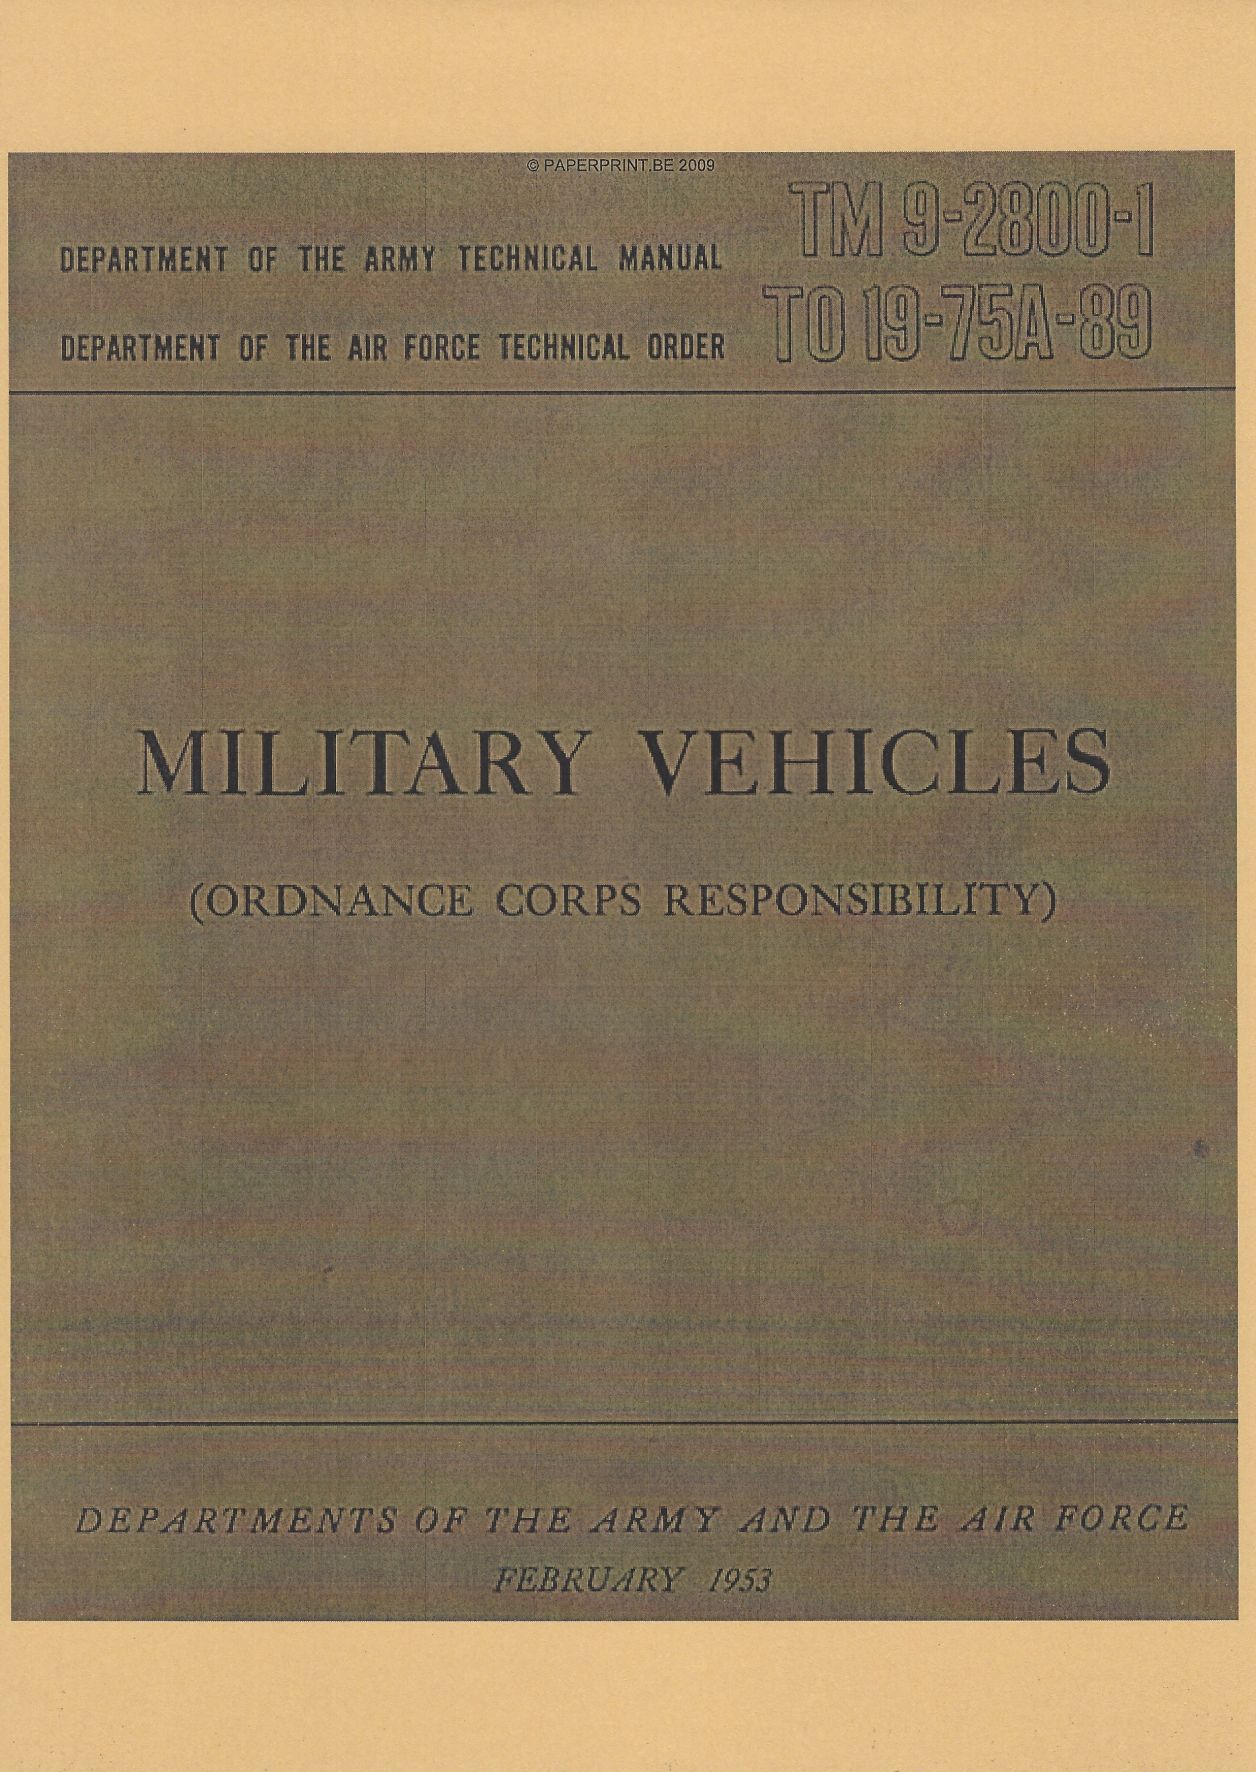 TM 9-2800-1 1953 MILITARY VEHICLES